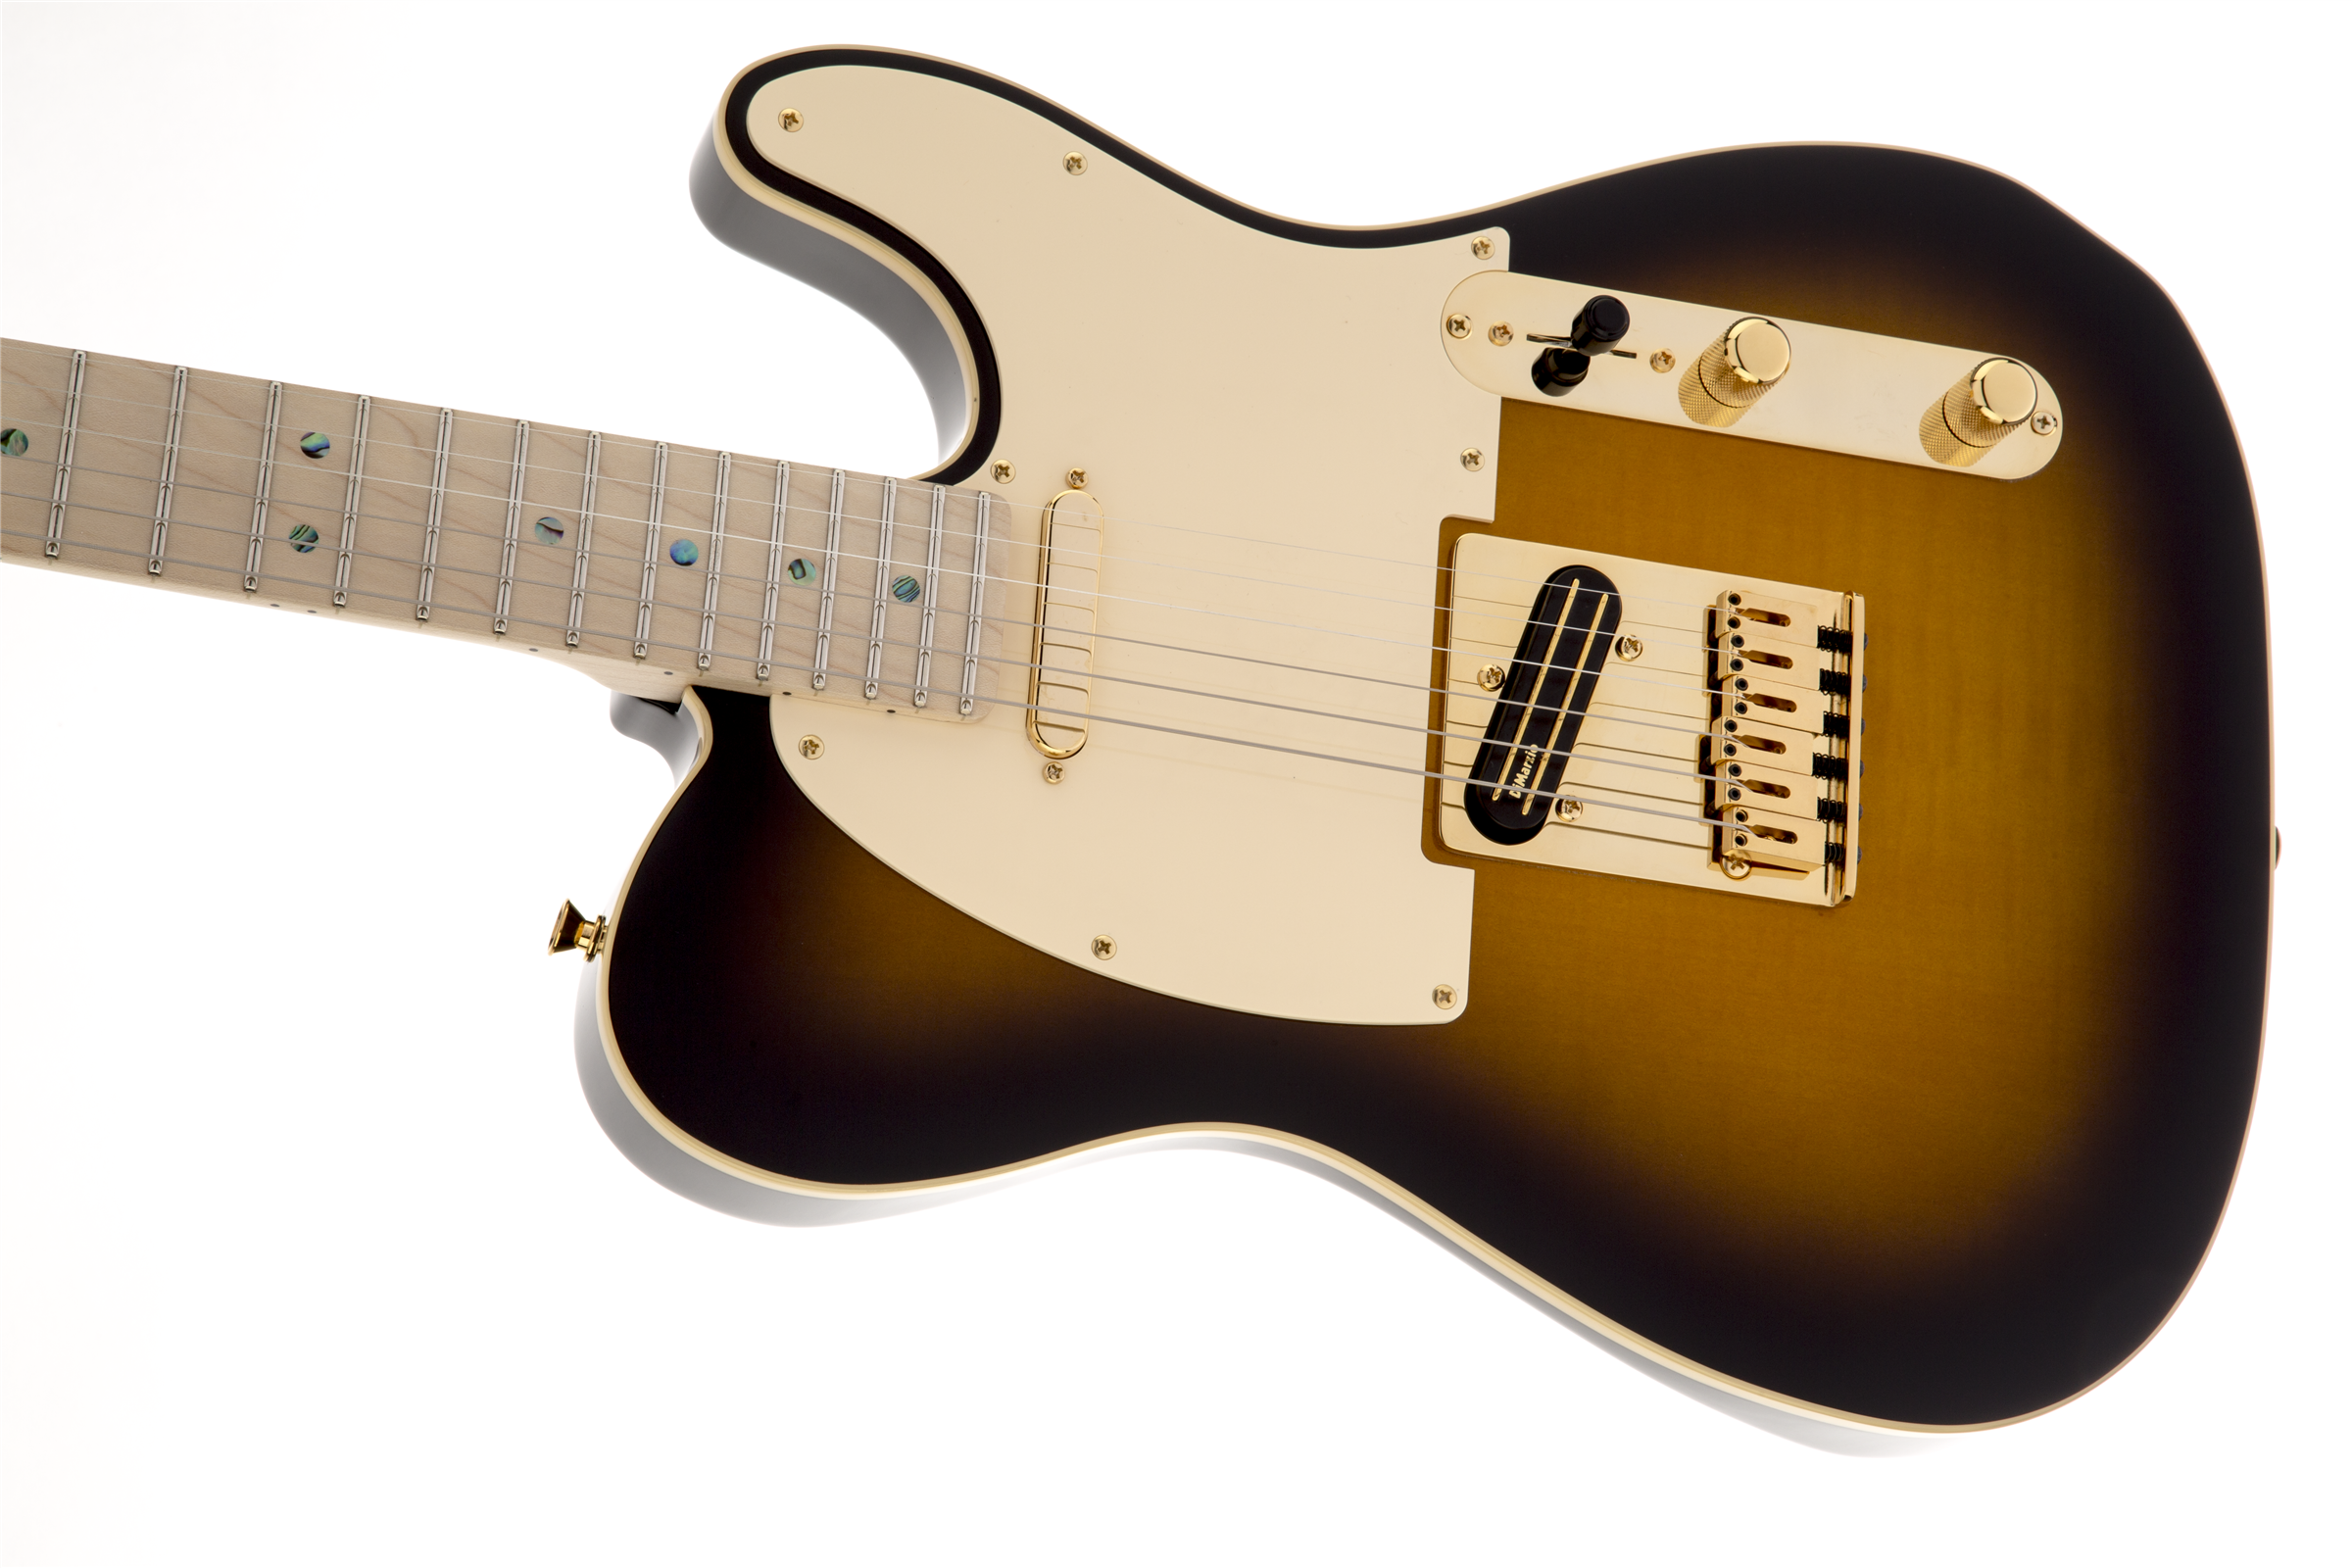 Fender Telecaster Richie Kotzen (jap, Mn) - Brown Sunburst - Tel shape electric guitar - Variation 4